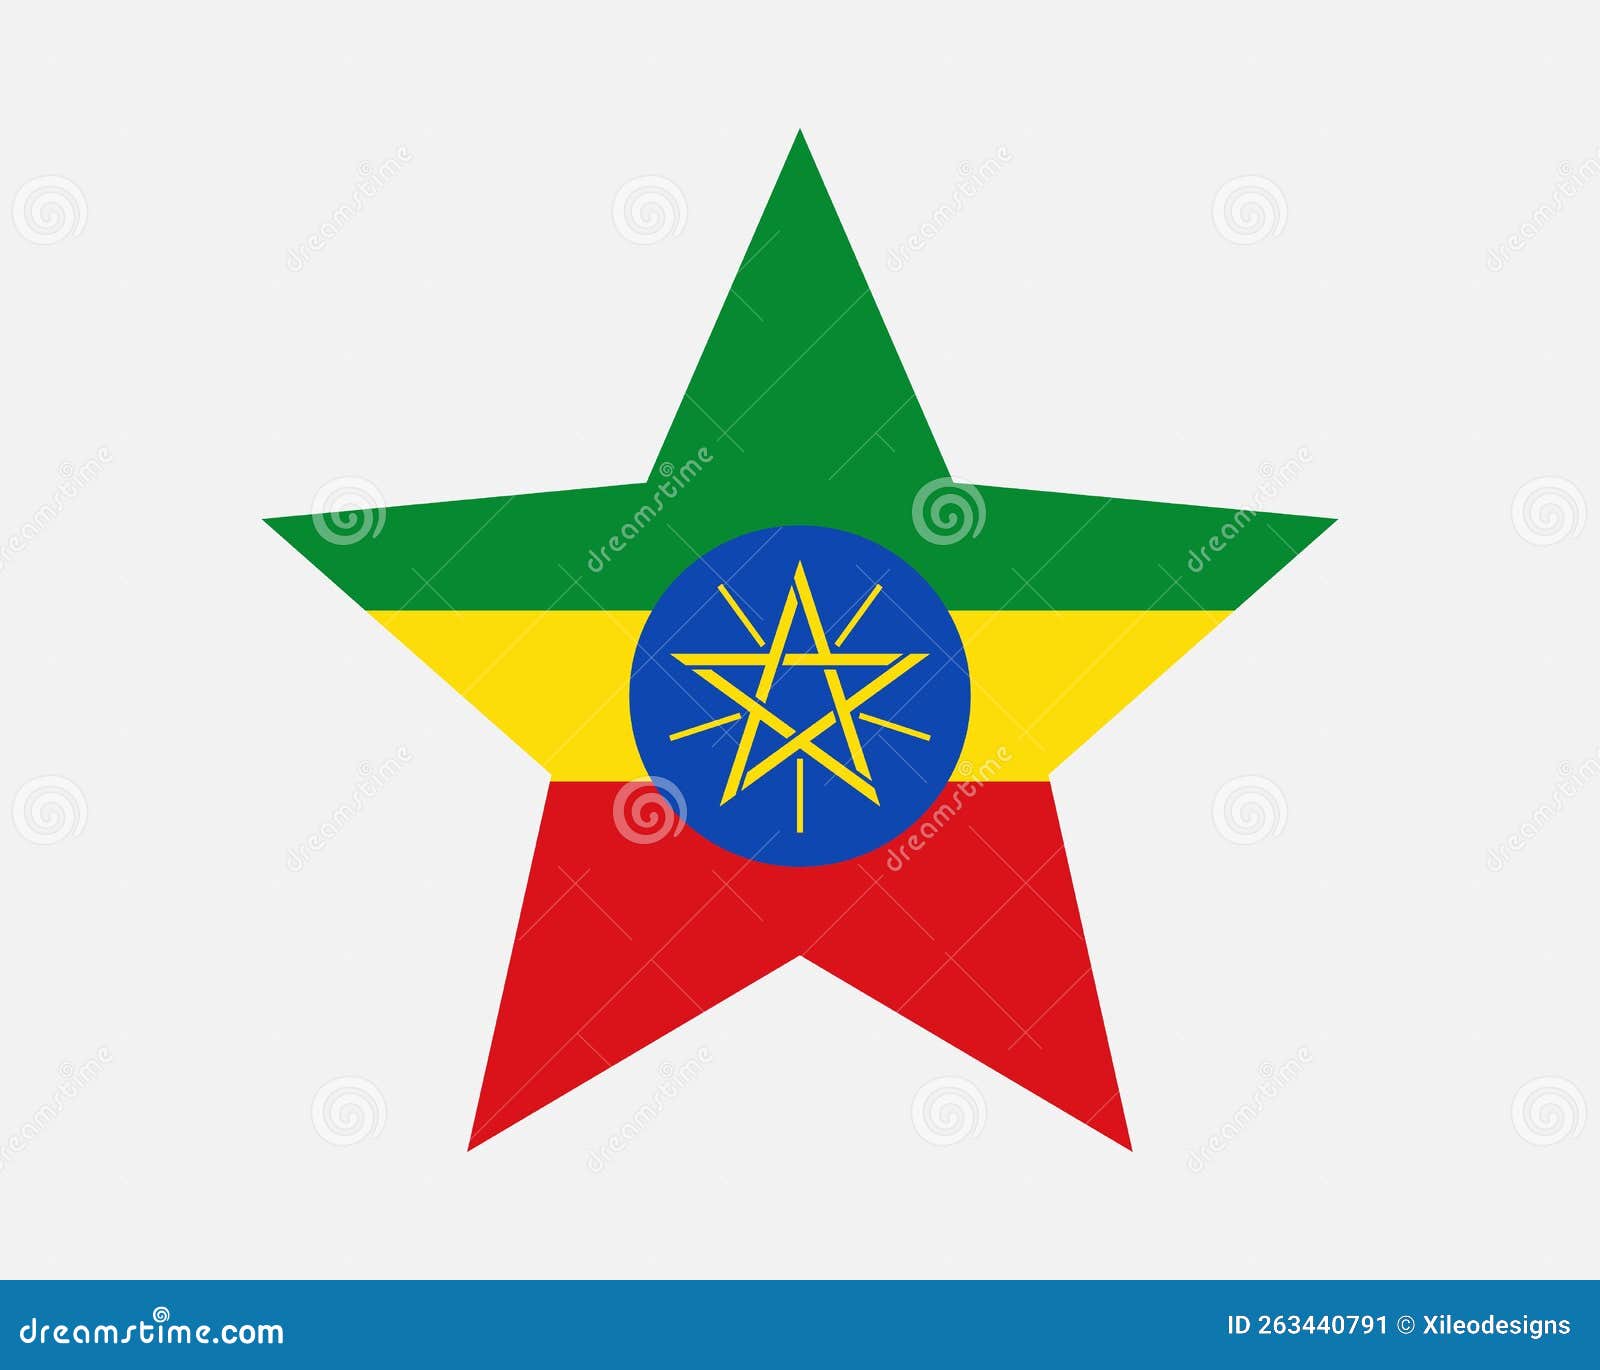 https://thumbs.dreamstime.com/z/ethiopia-star-flag-ethiopian-shape-country-national-banner-icon-symbol-vector-flat-artwork-graphic-illustration-263440791.jpg